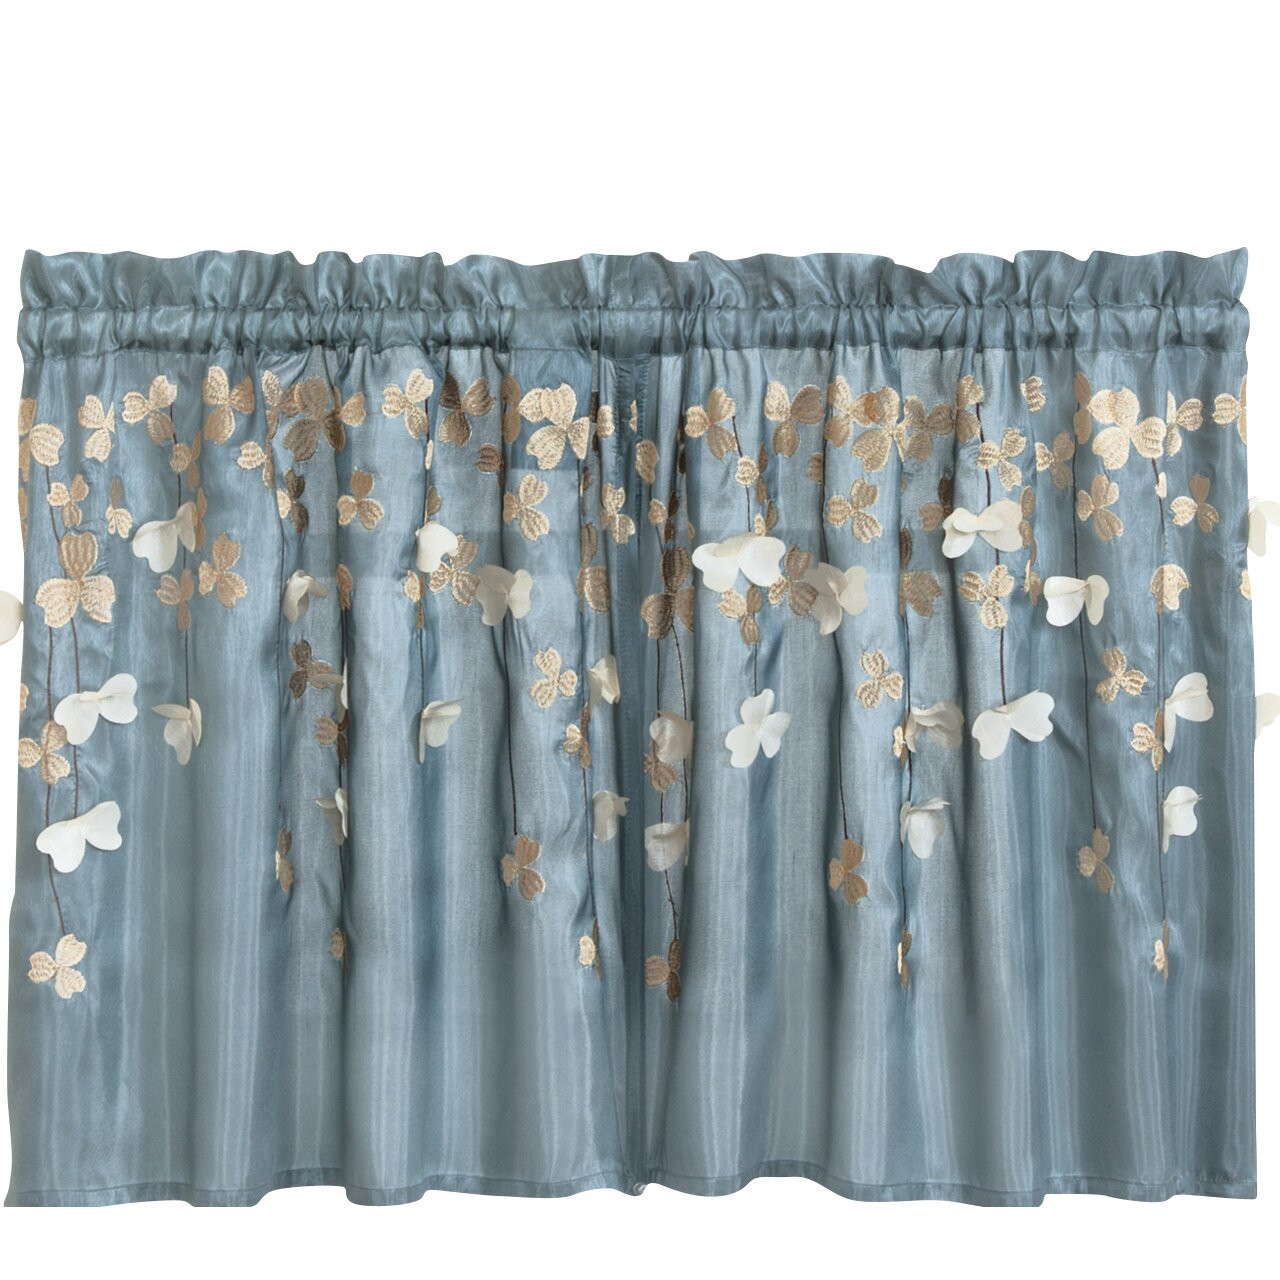 Kitchen Tier Curtains
 Lush Decor Flower Kitchen Light filtering Tier Curtain